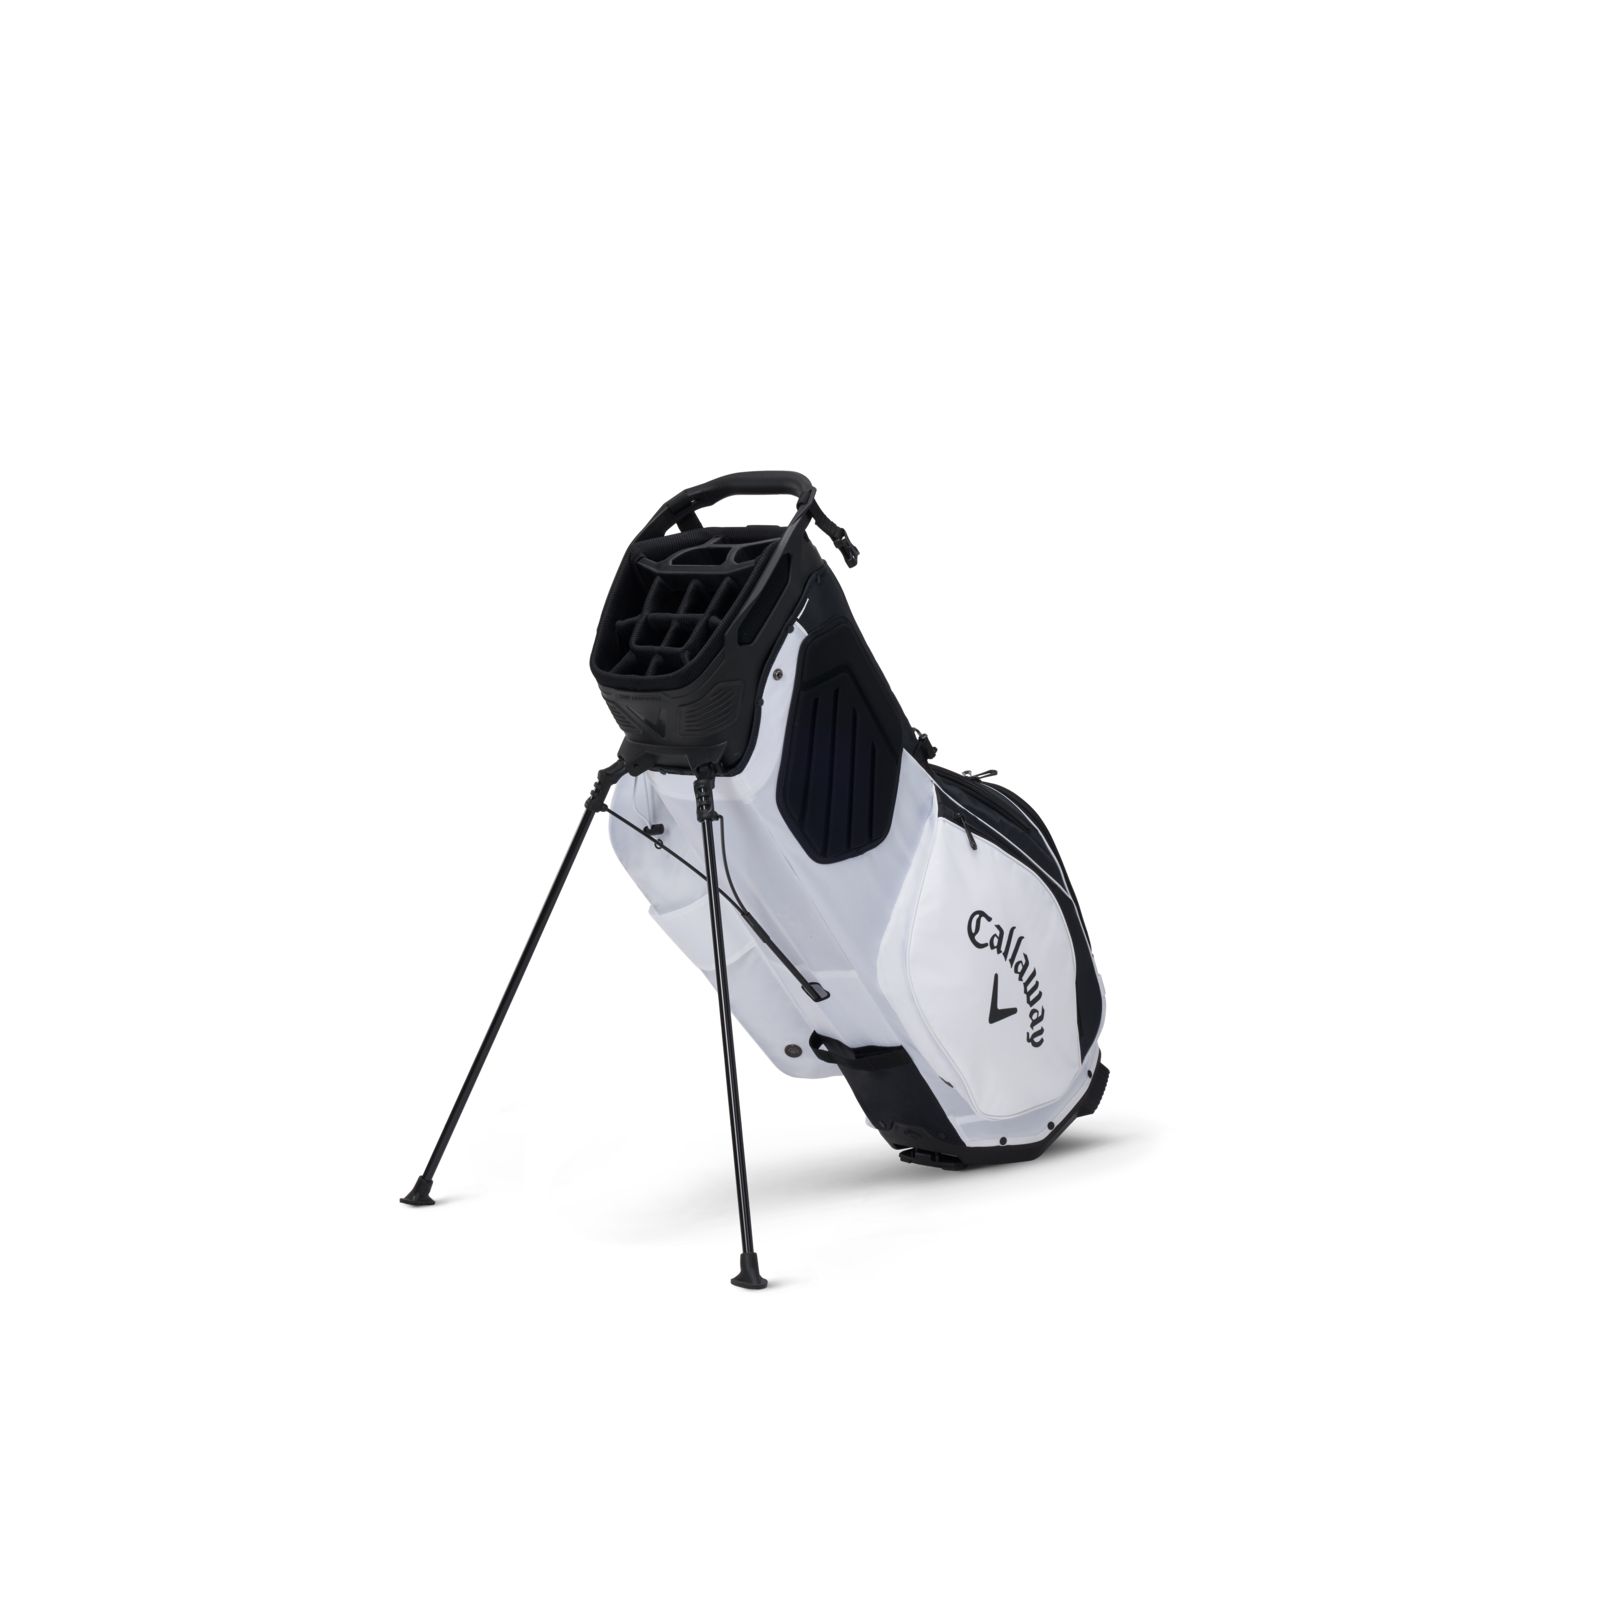 Callaway Fairway 14 Golf Stand Bag Black White - image 3 of 3